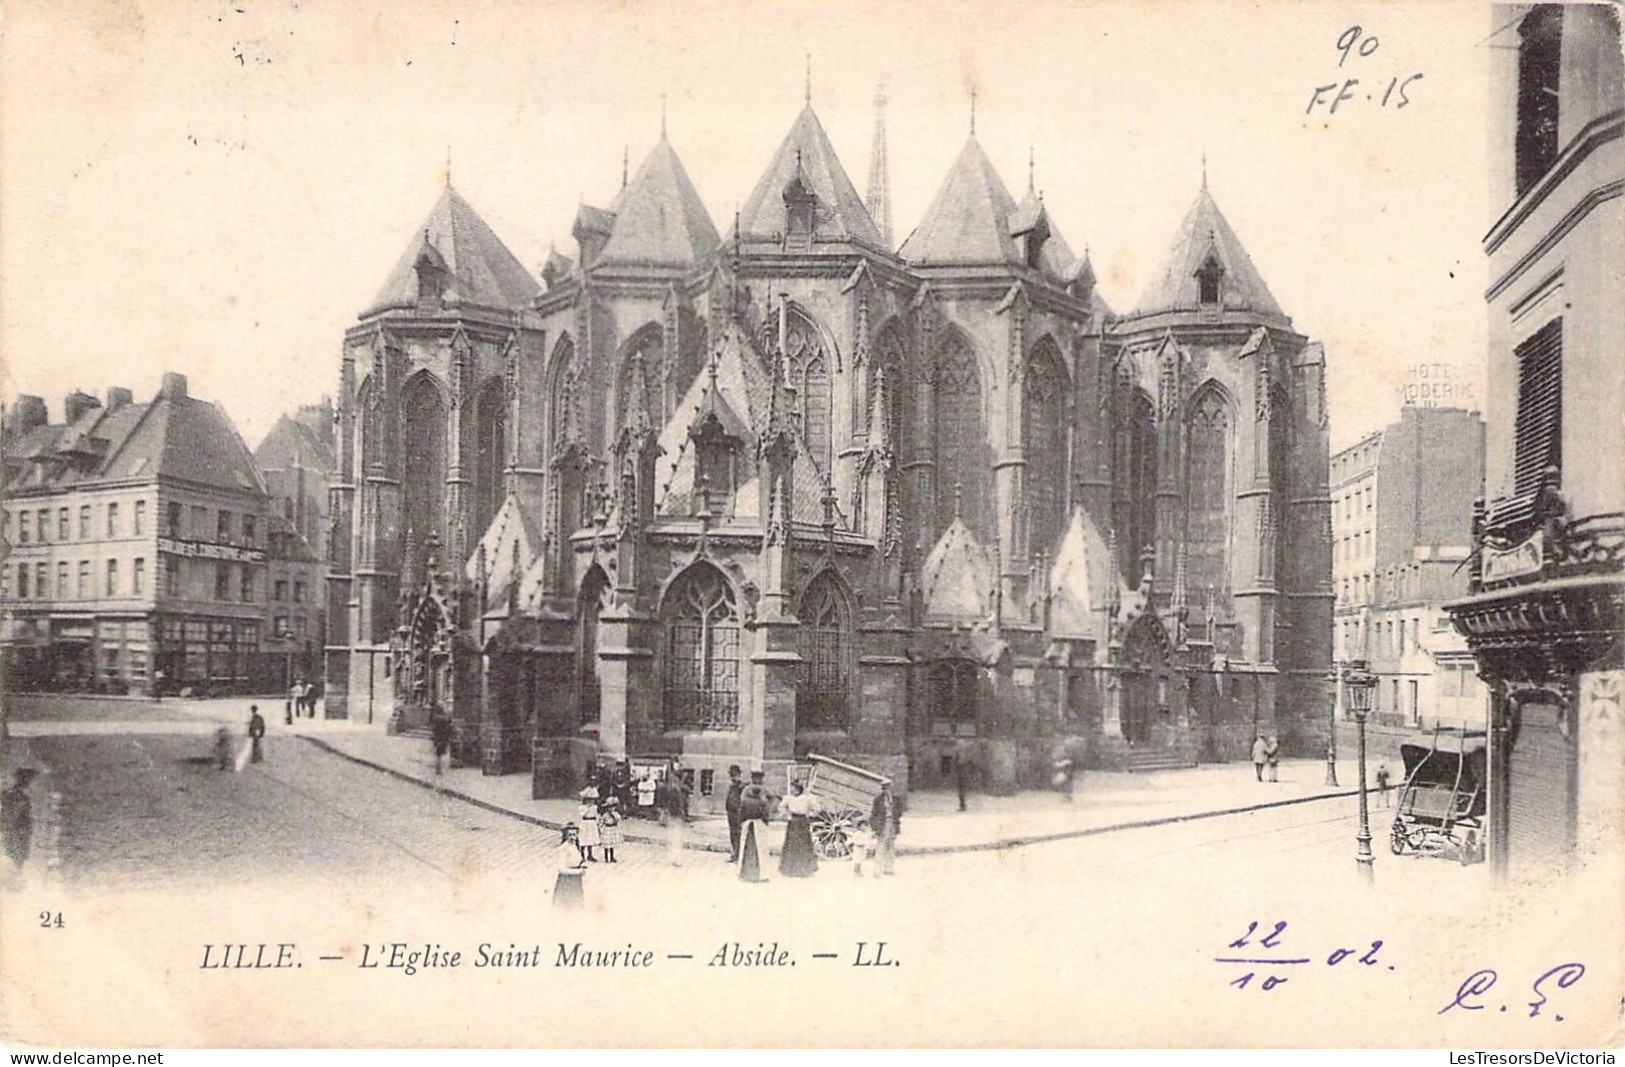 FRANCE - 59 - LILLE - L'église St Maurice - Abside - LL - Carte Postale Ancienne - Lille